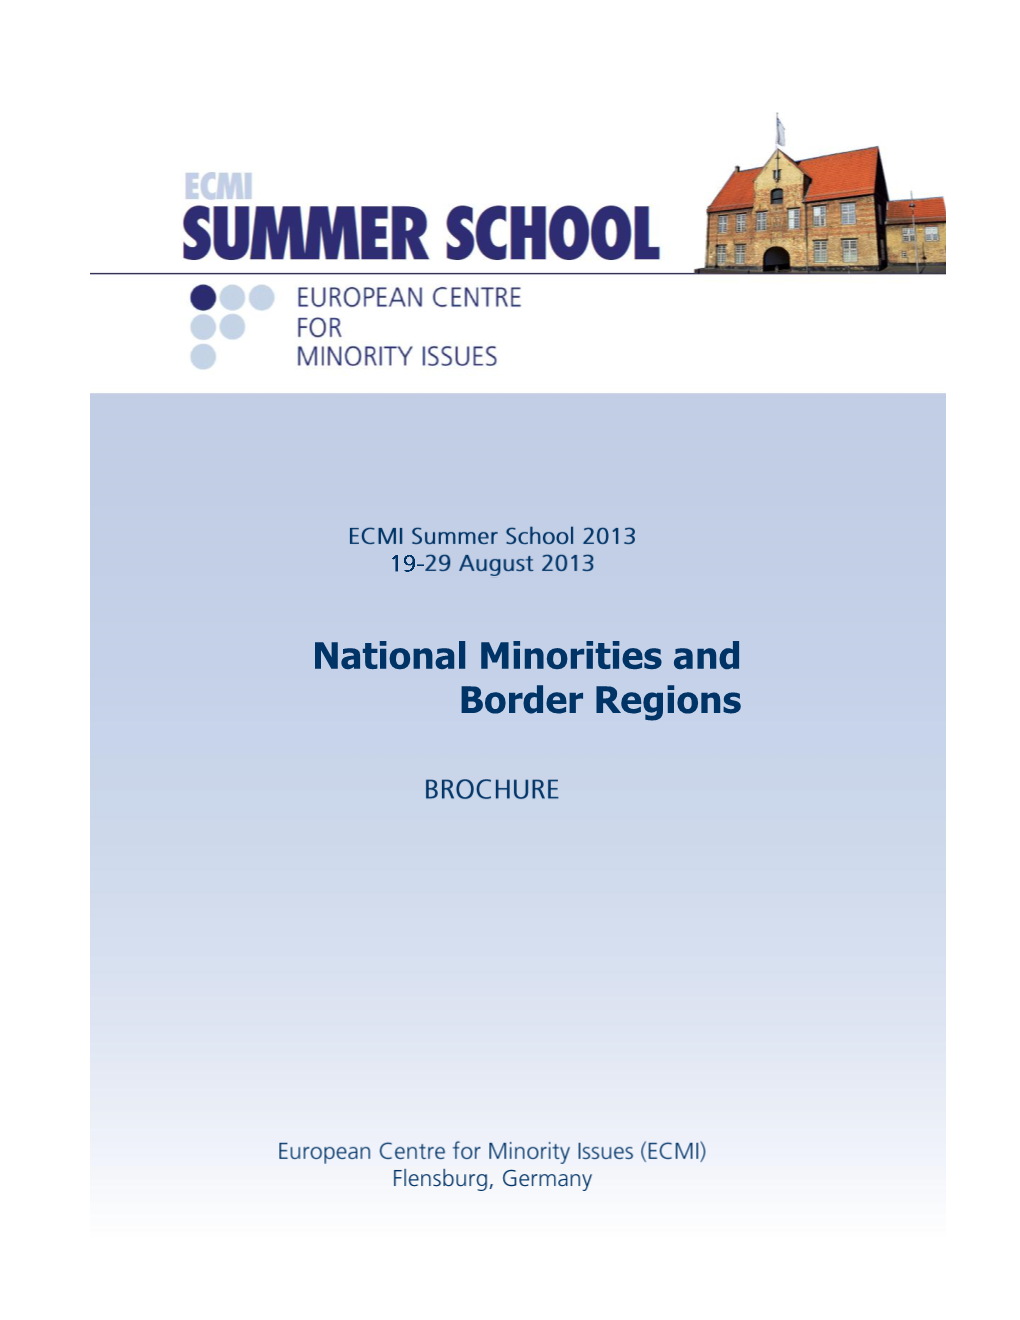 National Minorities and Border Regions